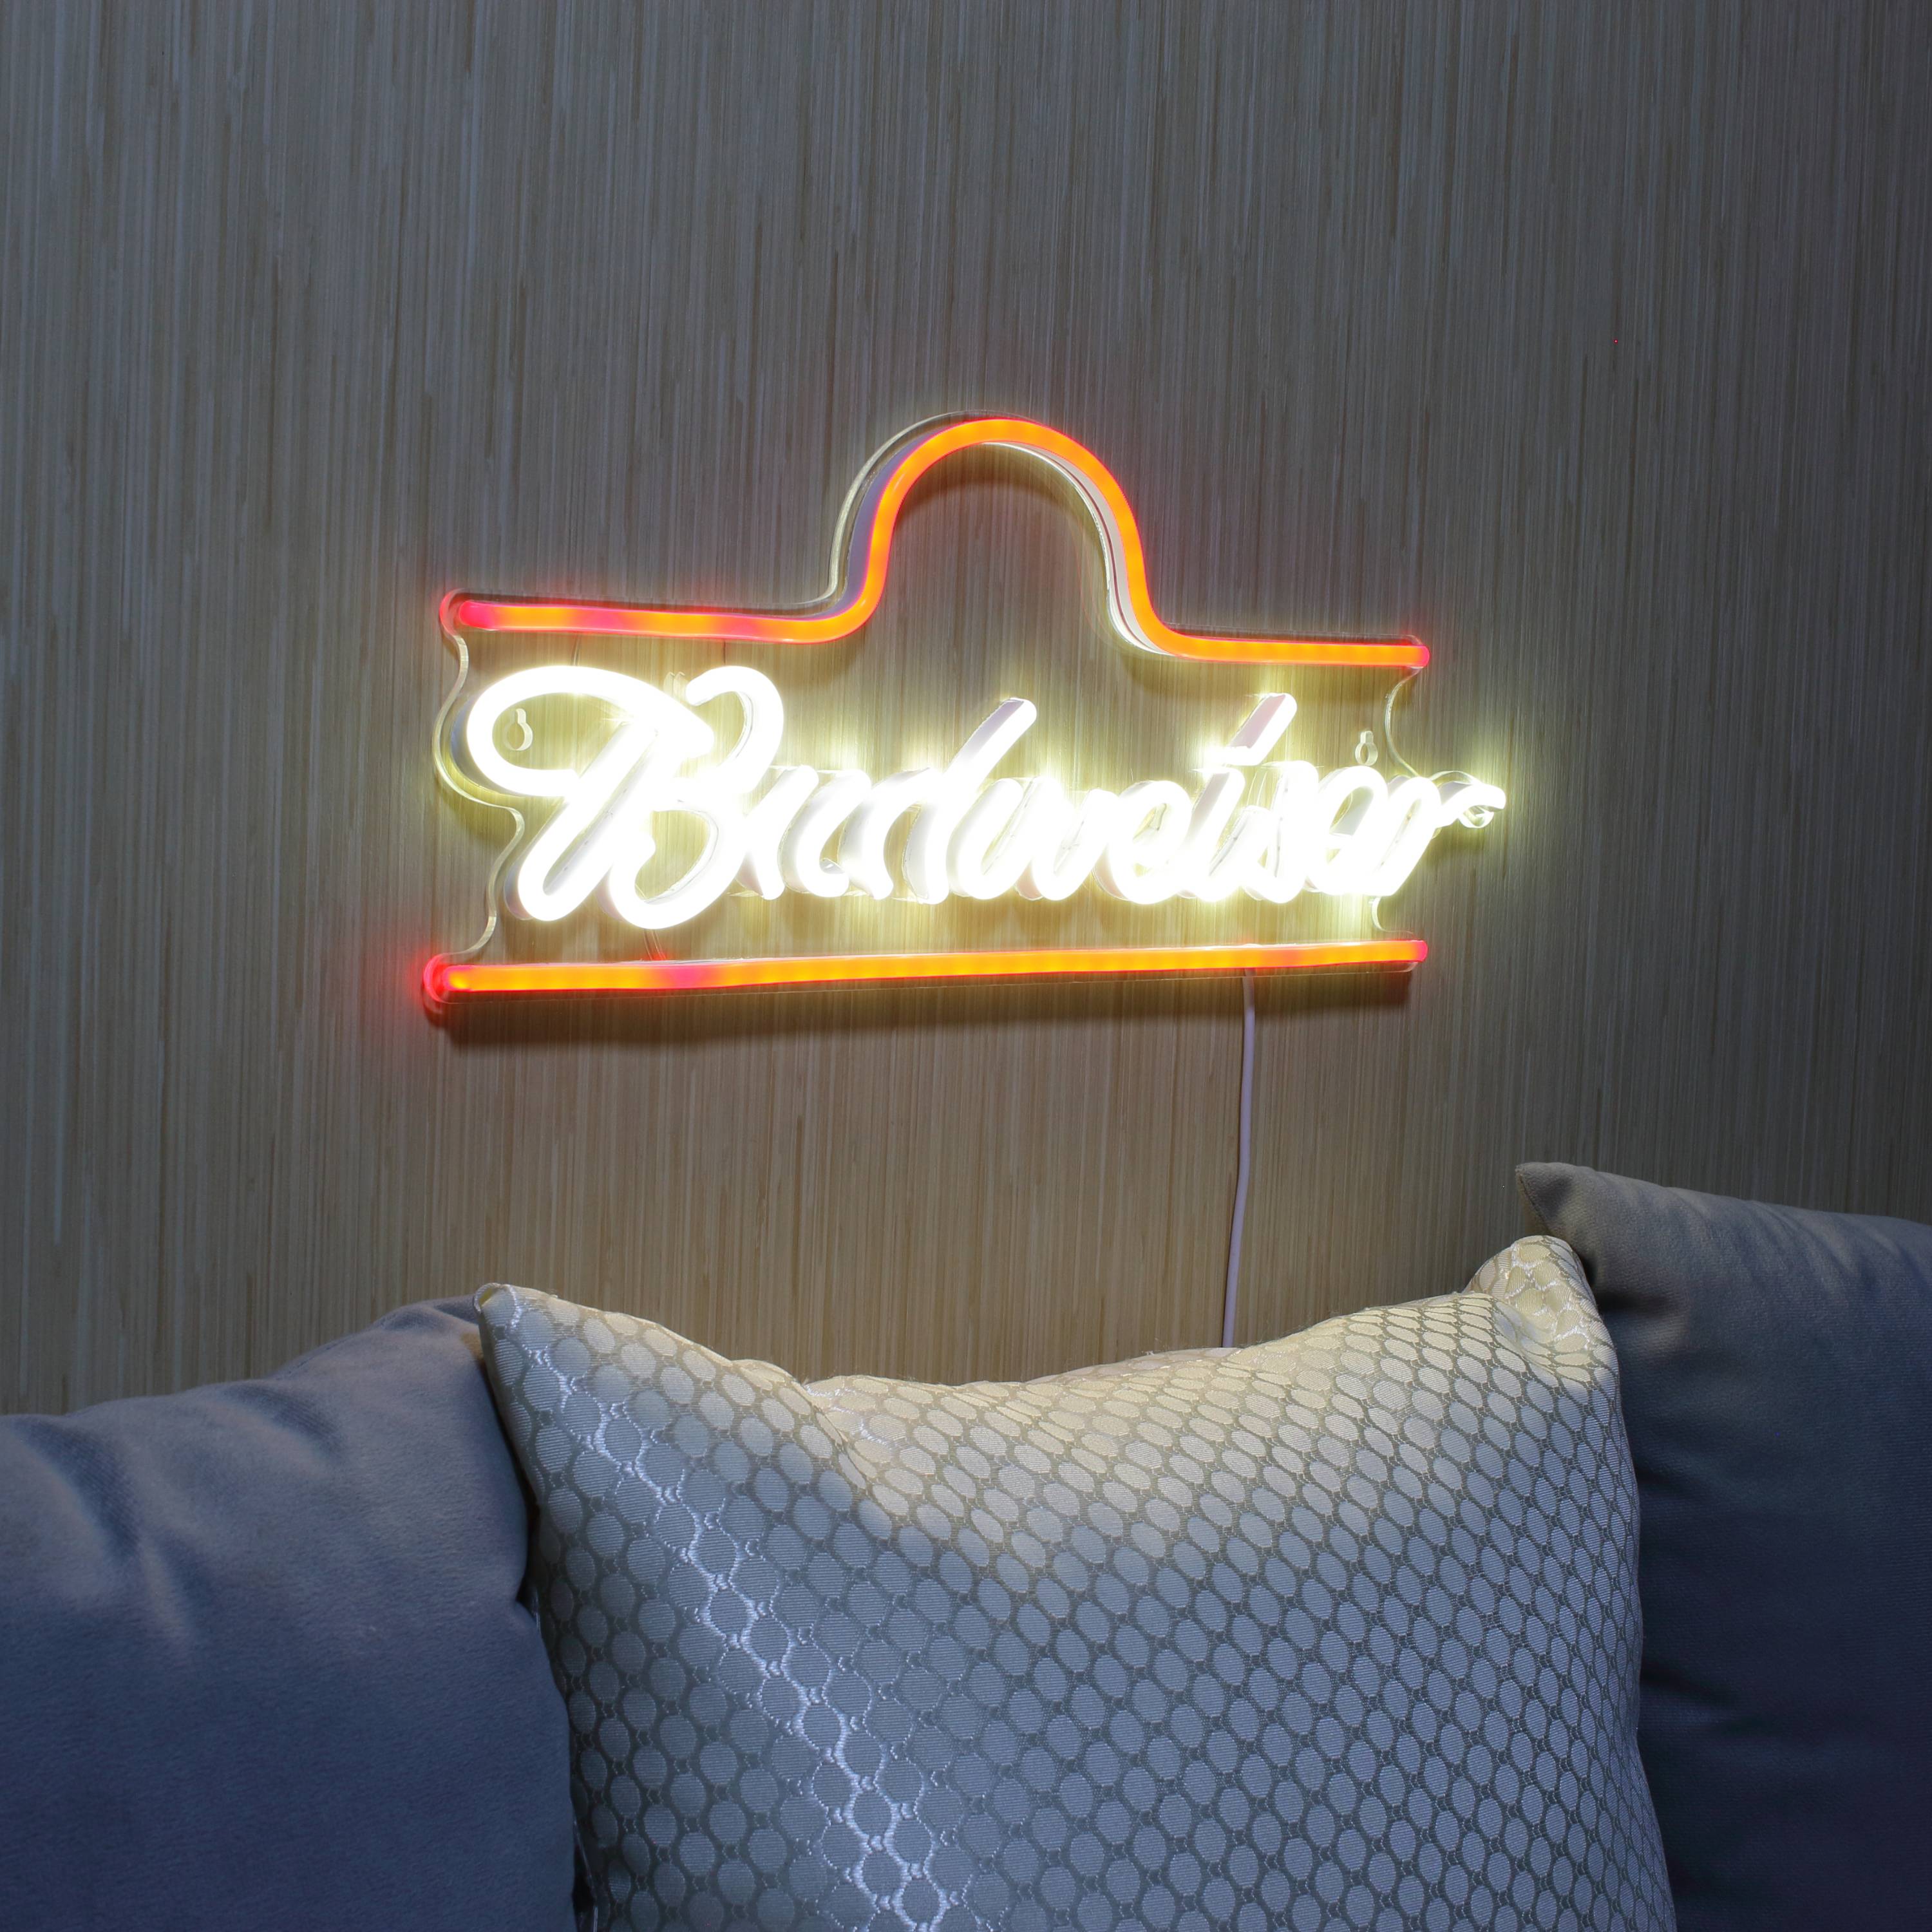 Budweiser Large Flex Neon LED Sign|PRO LED SIGN